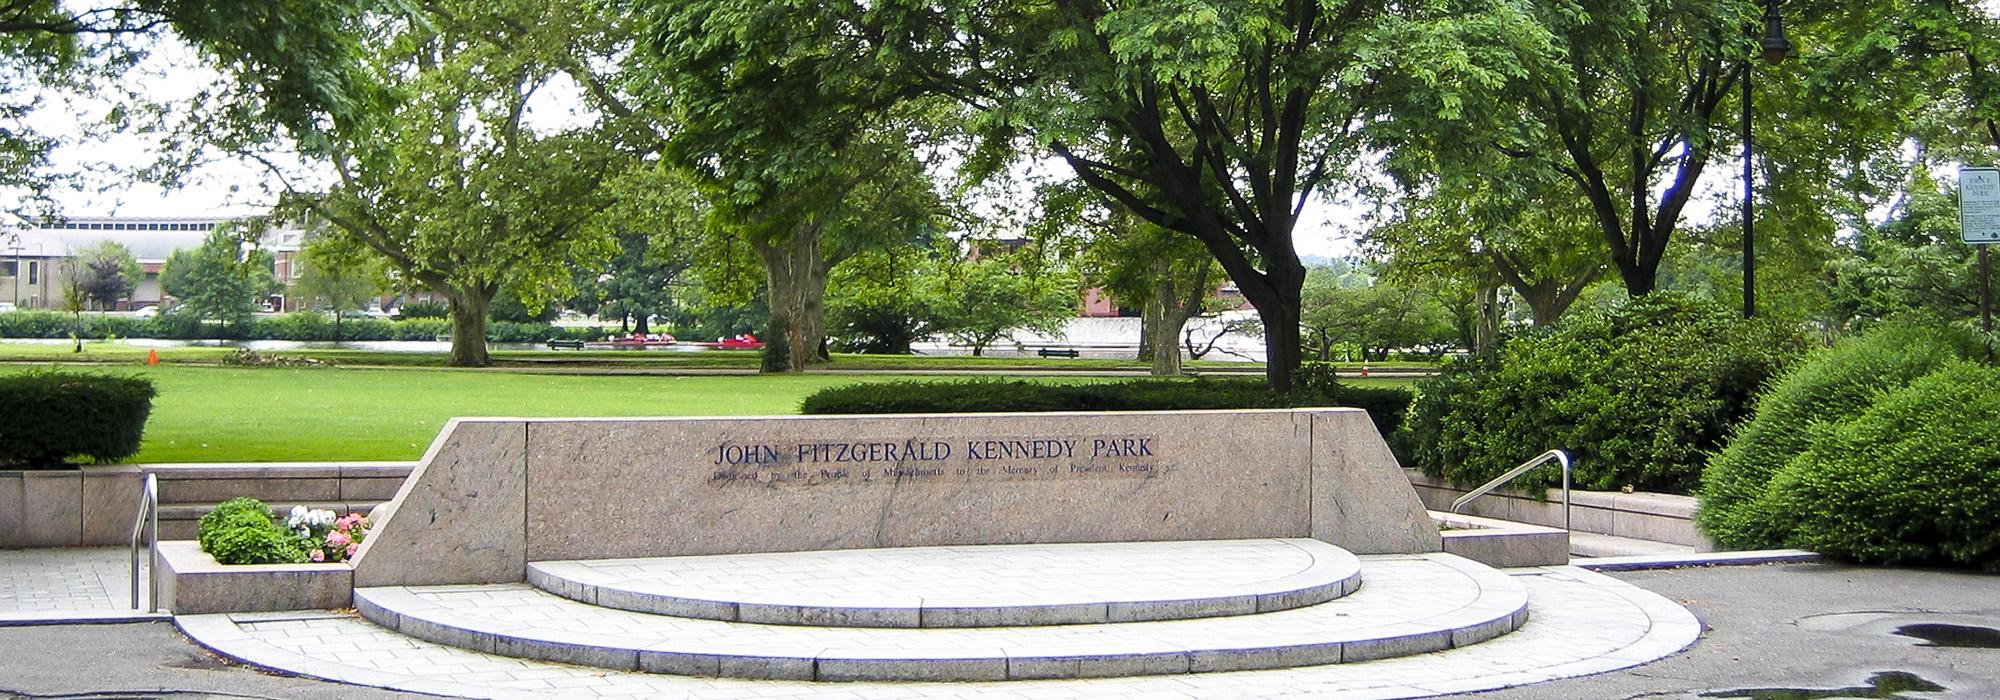 John F. Kennedy Park - Cambridge, Cambridge, MA